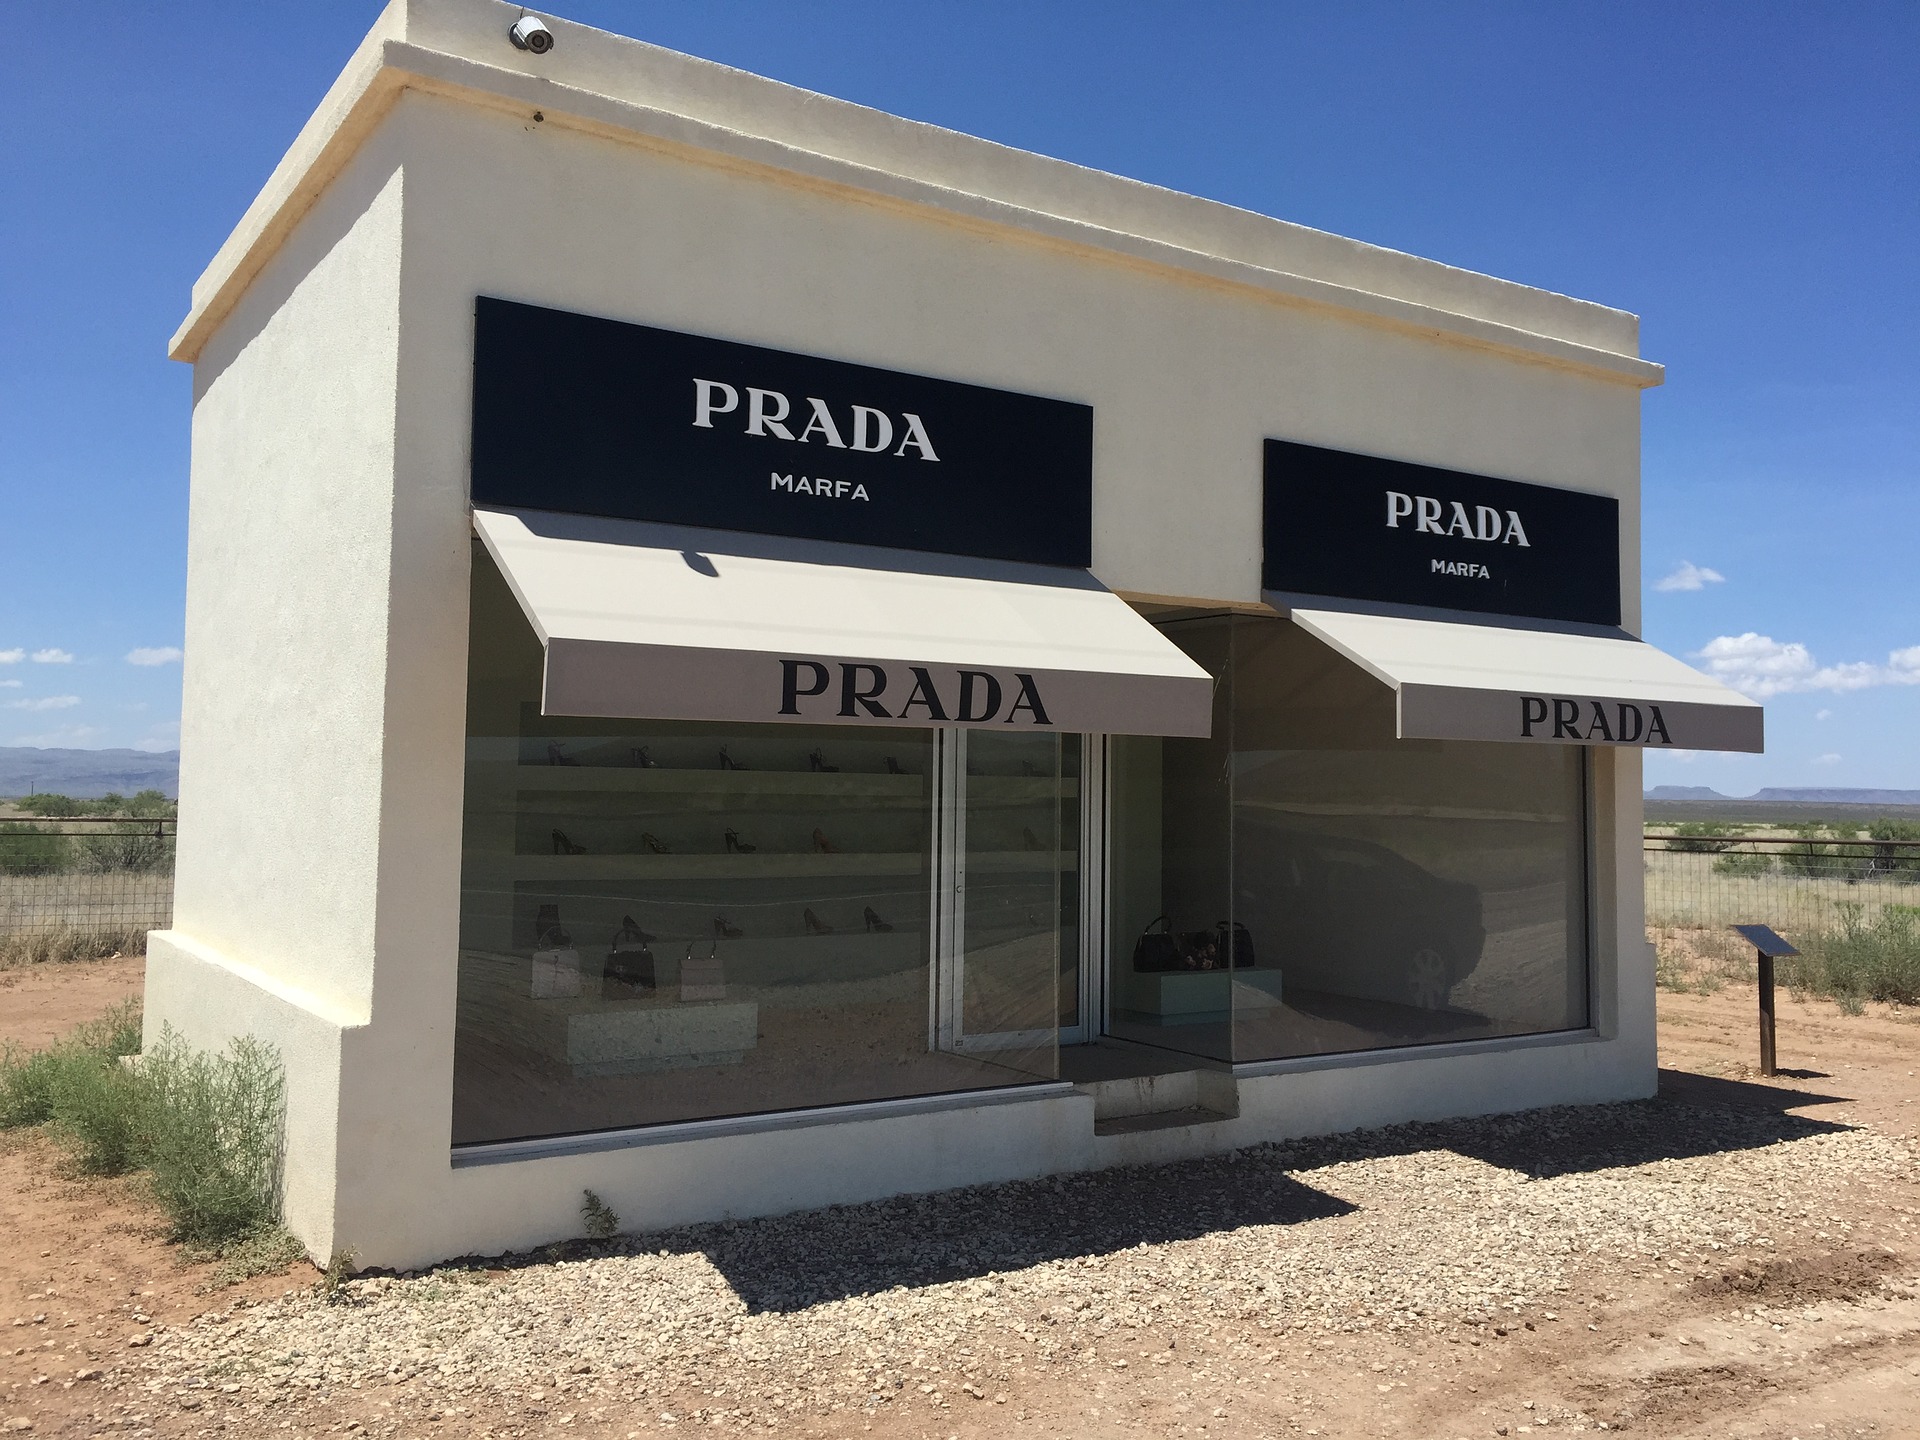 A Prada Retail Store In The Desert